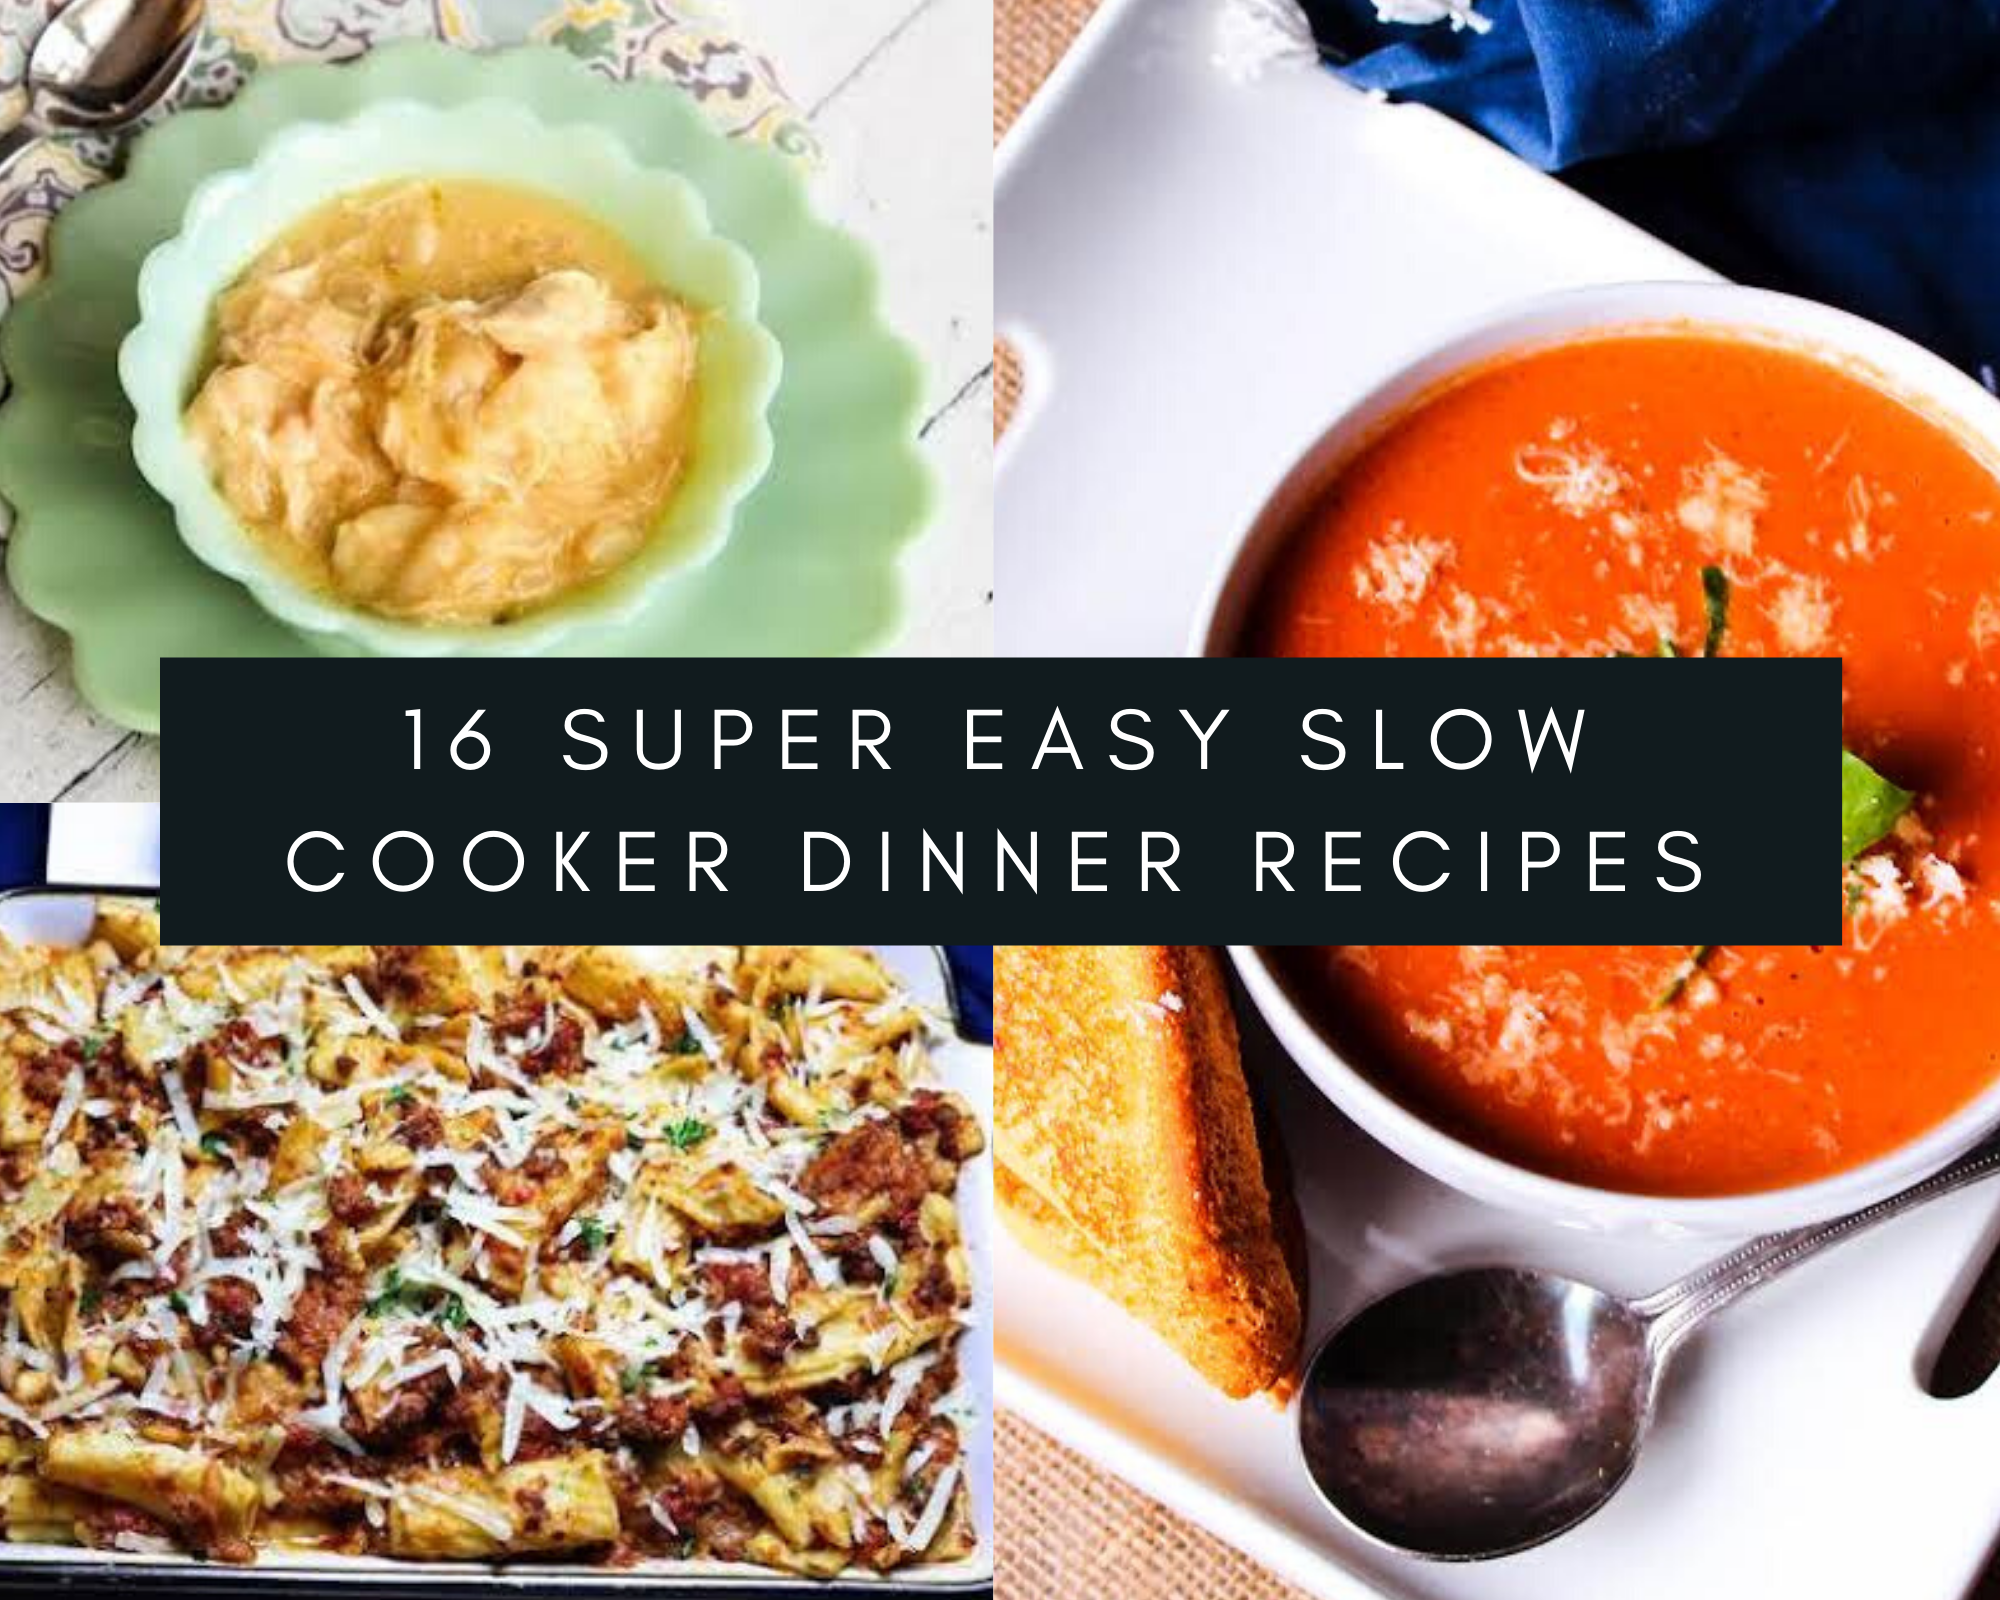 16 Super Easy Slow Cooker Dinner Recipes